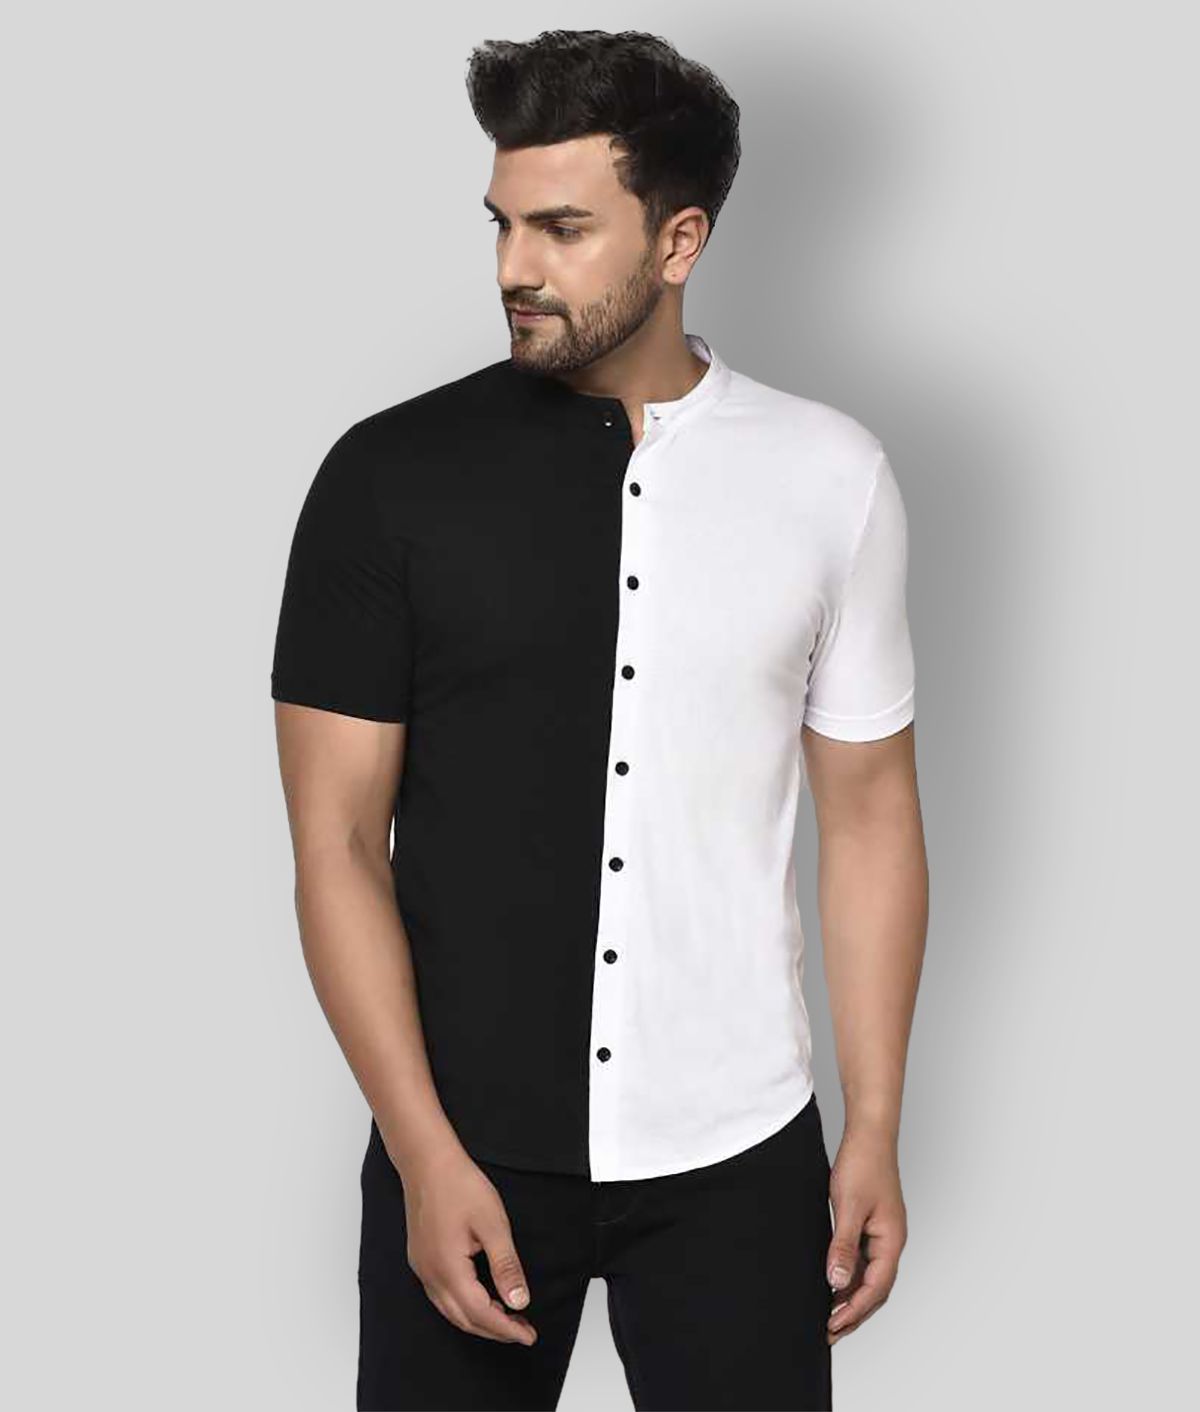     			Glito - Multicolor Cotton Blend Regular Fit Men's Casual Shirt (Pack of 1)